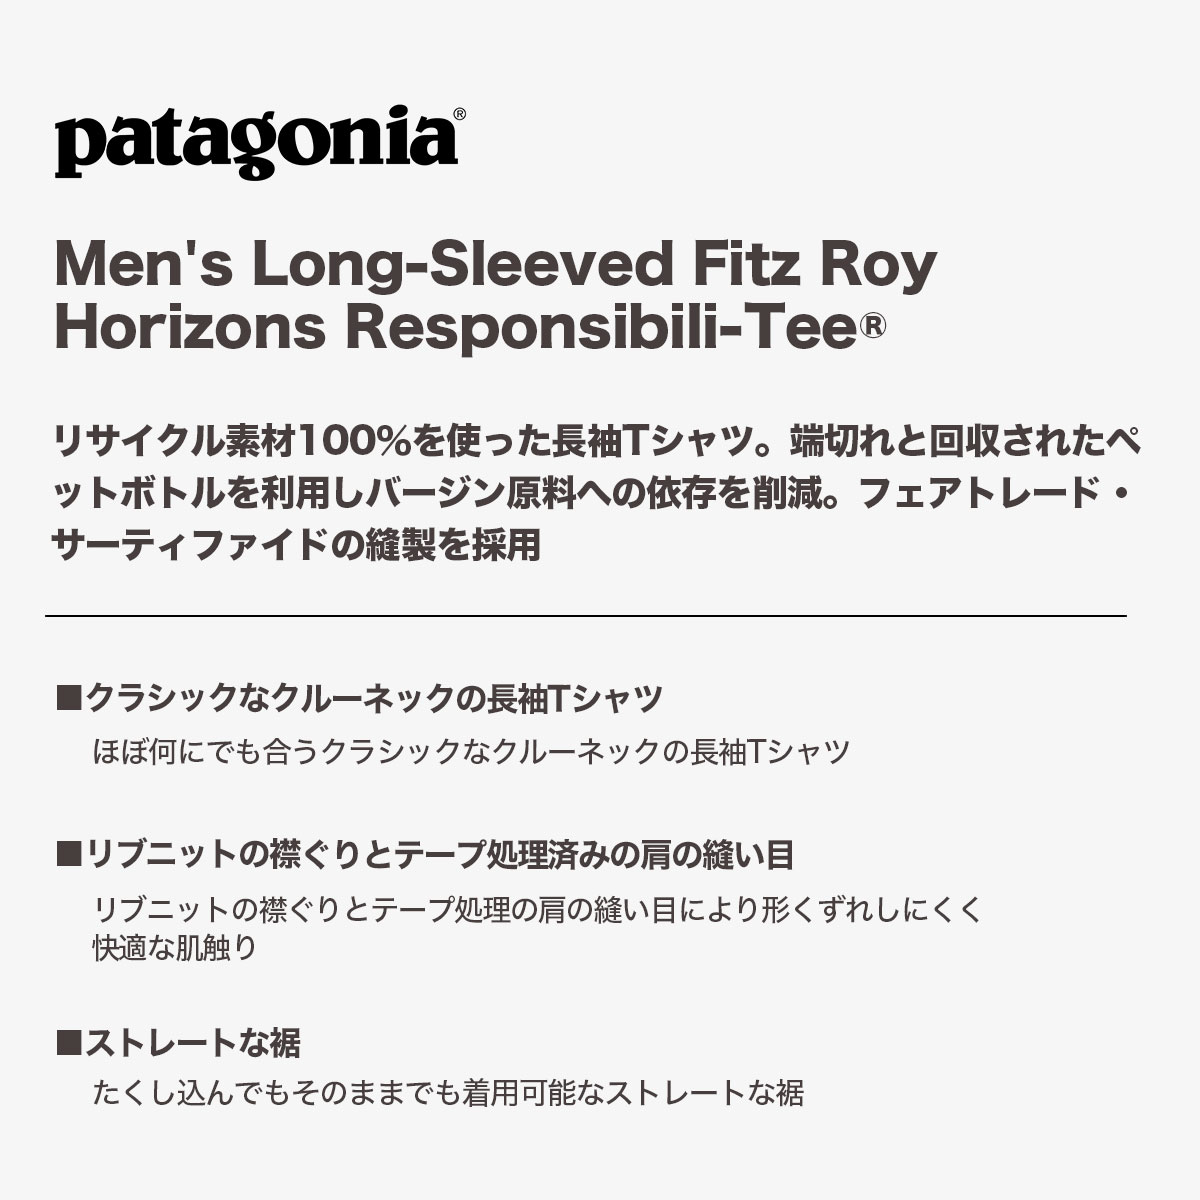 Patagonia パタゴニア ロンT 長袖 Tシャツ メンズ・ロングスリーブ